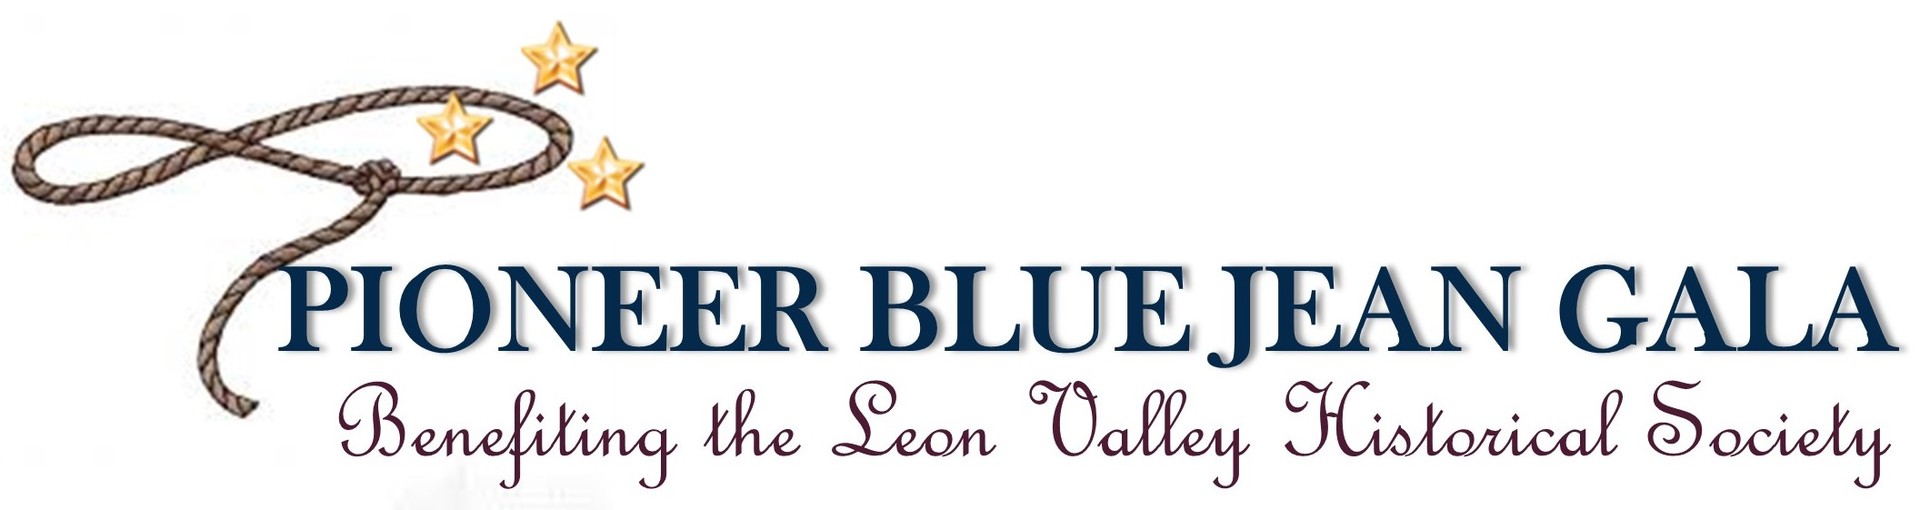 Pioneer Blue Jean Gala, San Antonio, Texas, United States